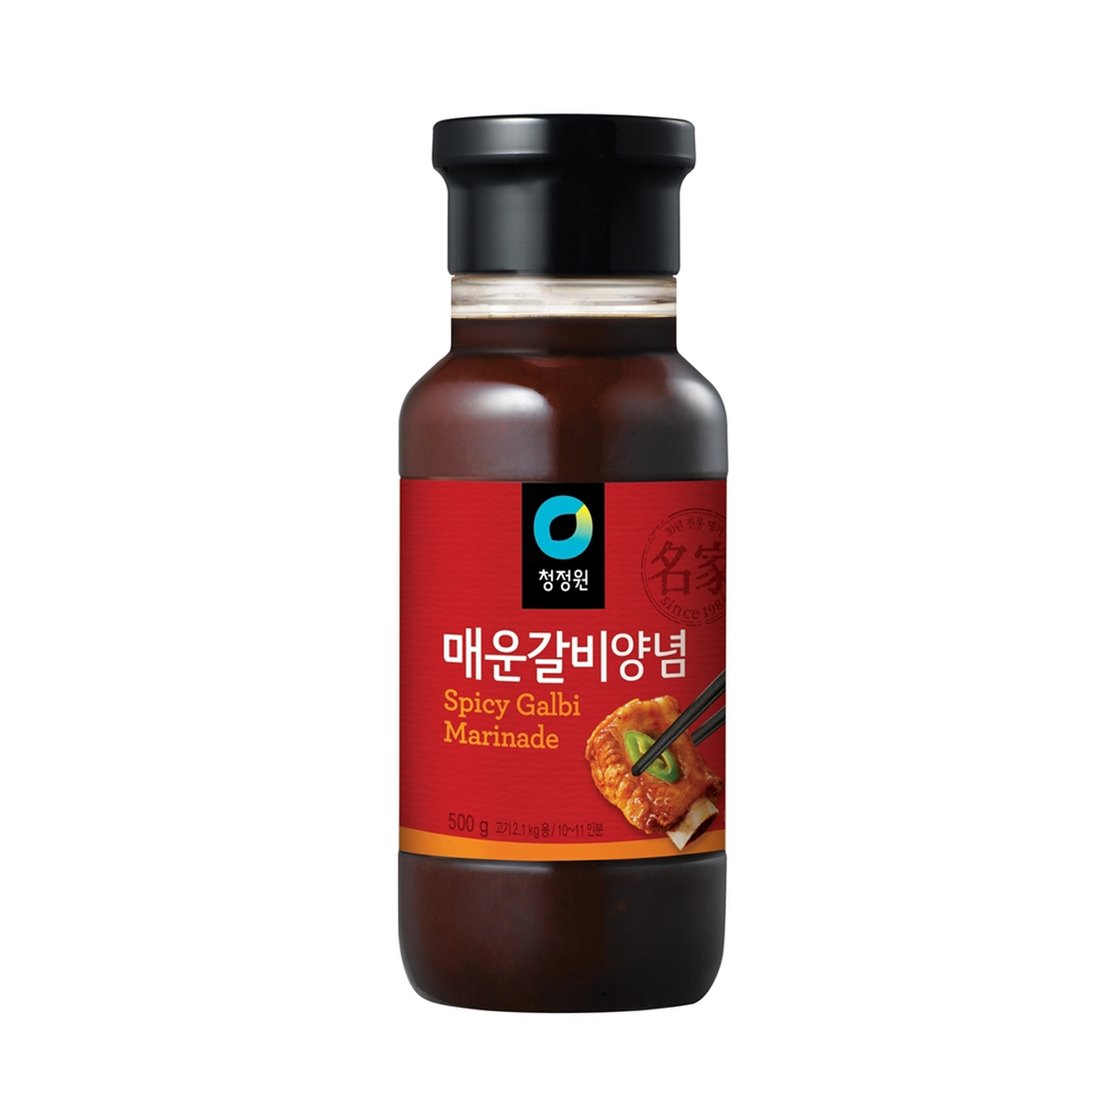 CJW Spicy Galbi Marinade 500g/청정원 매운갈비양념 500g